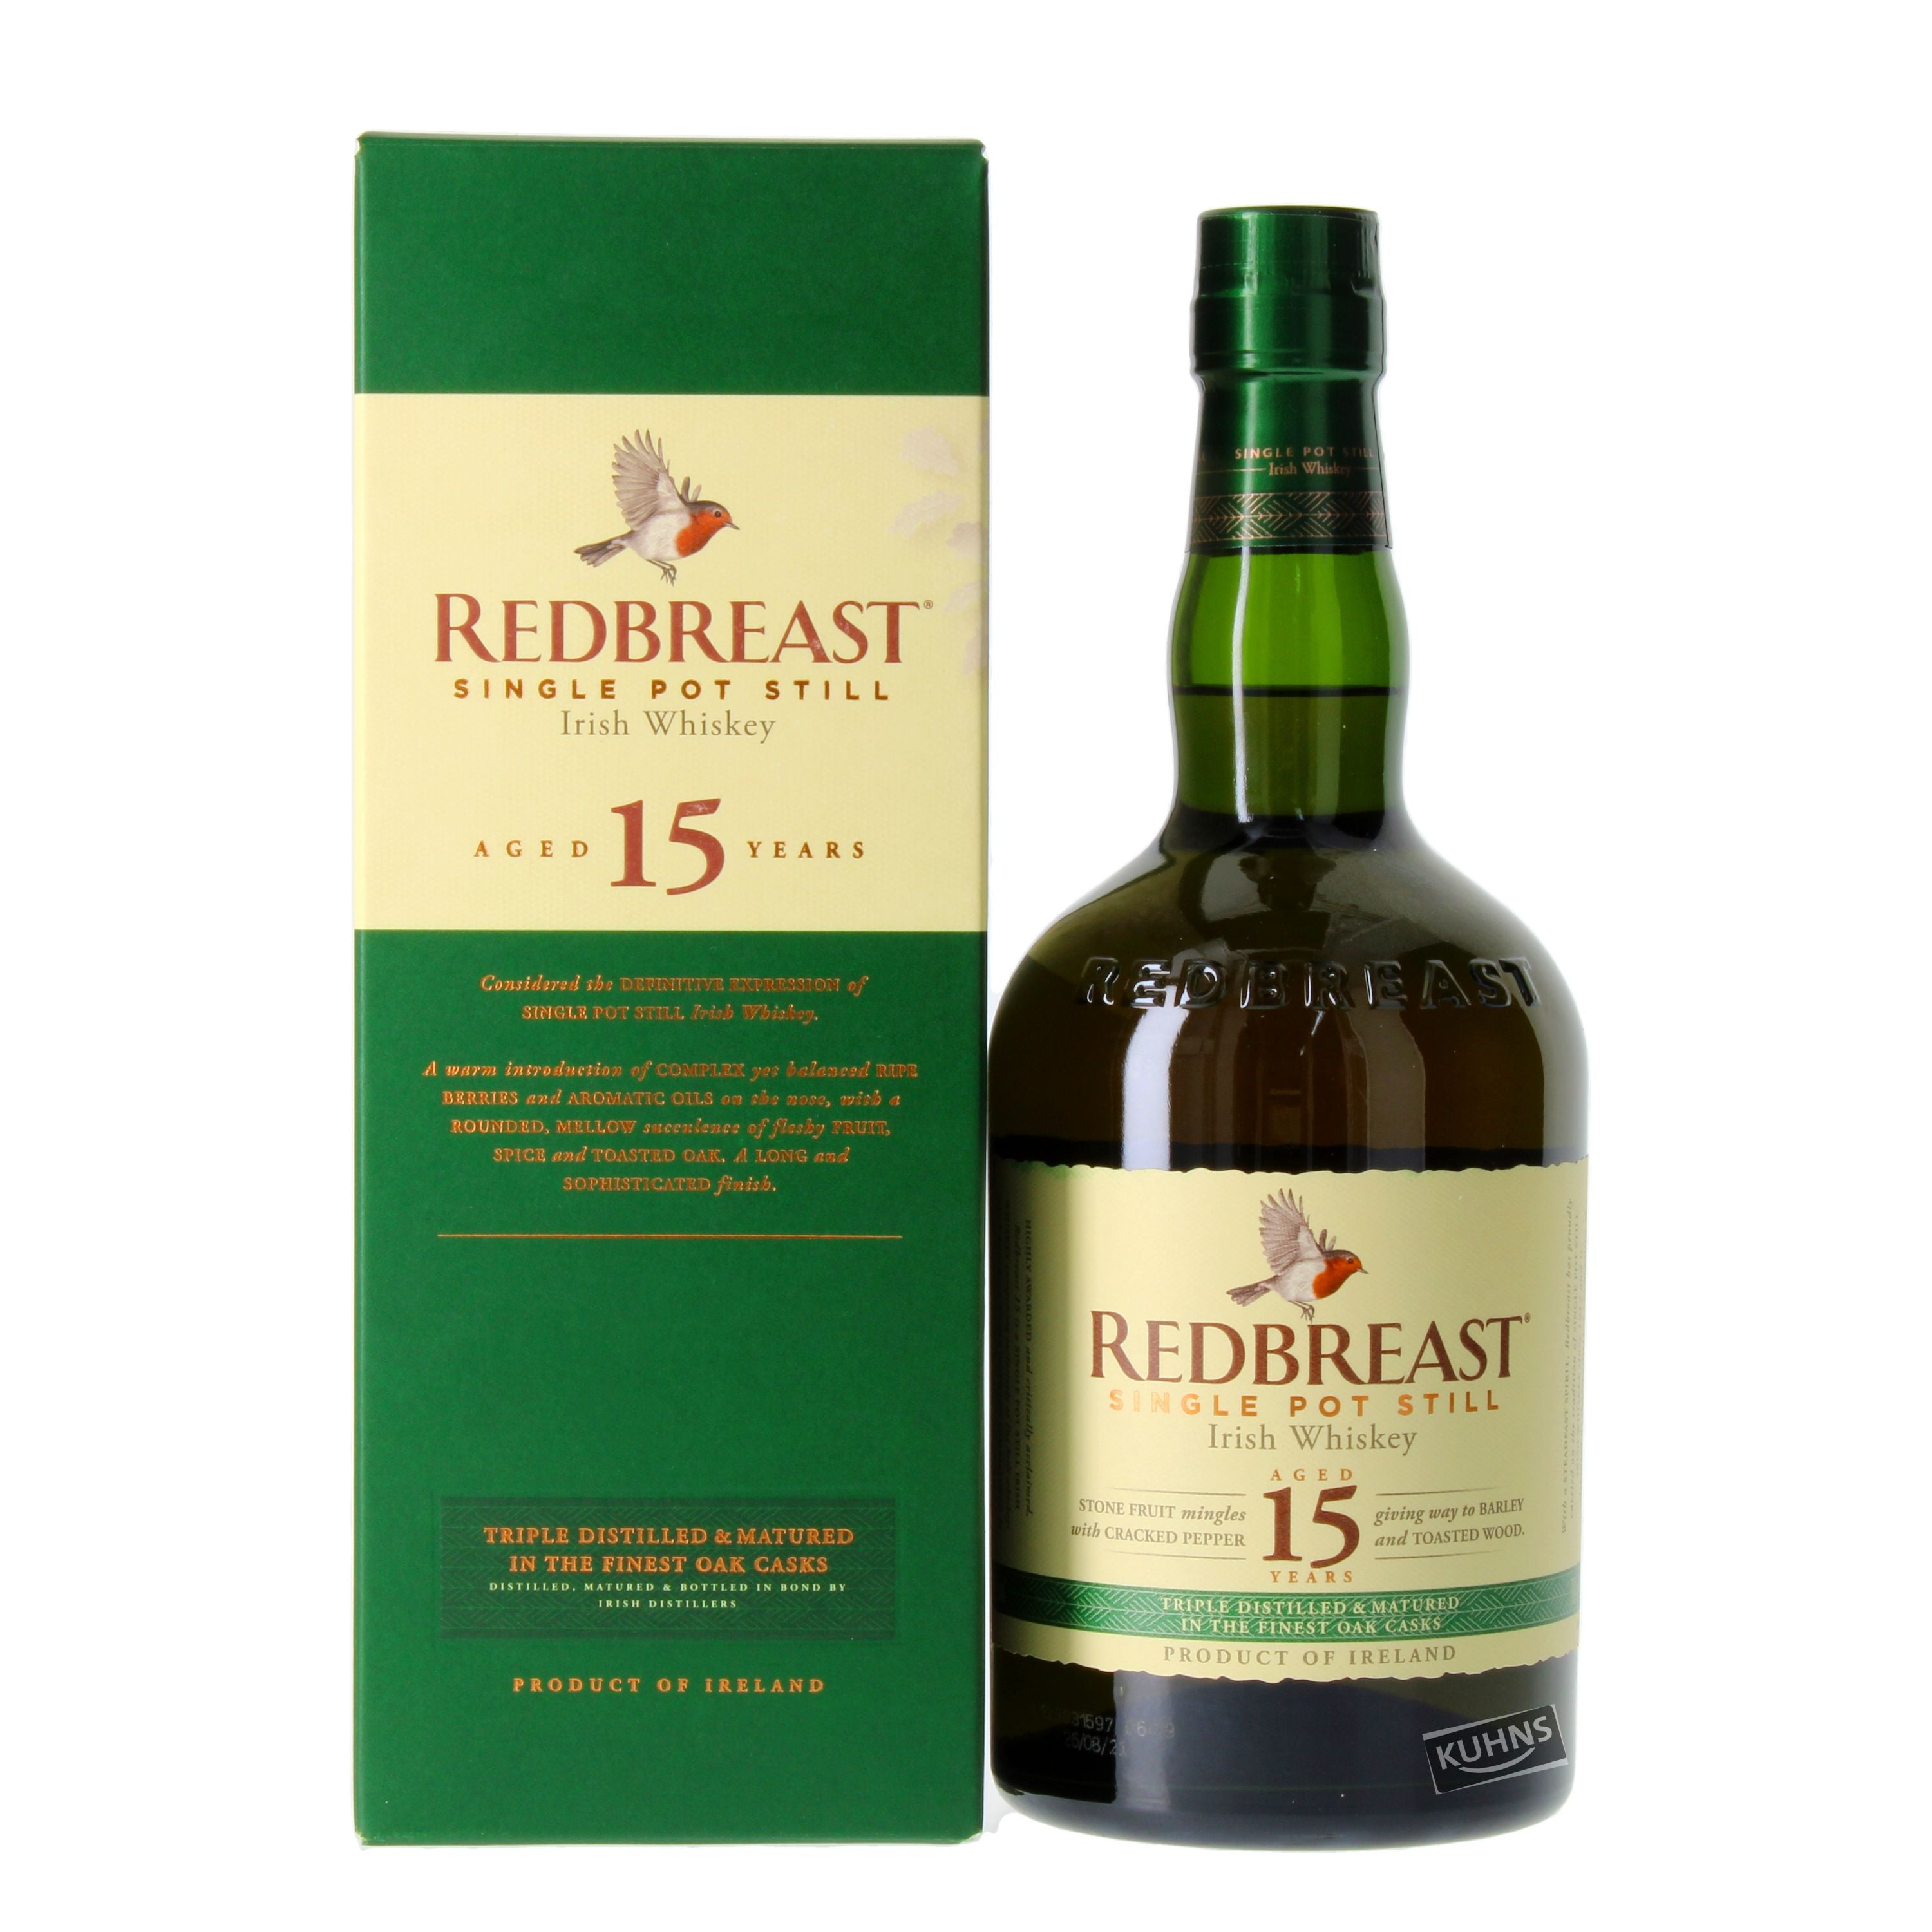 Redbreast 15 Years Single Pot Still Irish Whiskey 0.7l, alc. 46% by volume